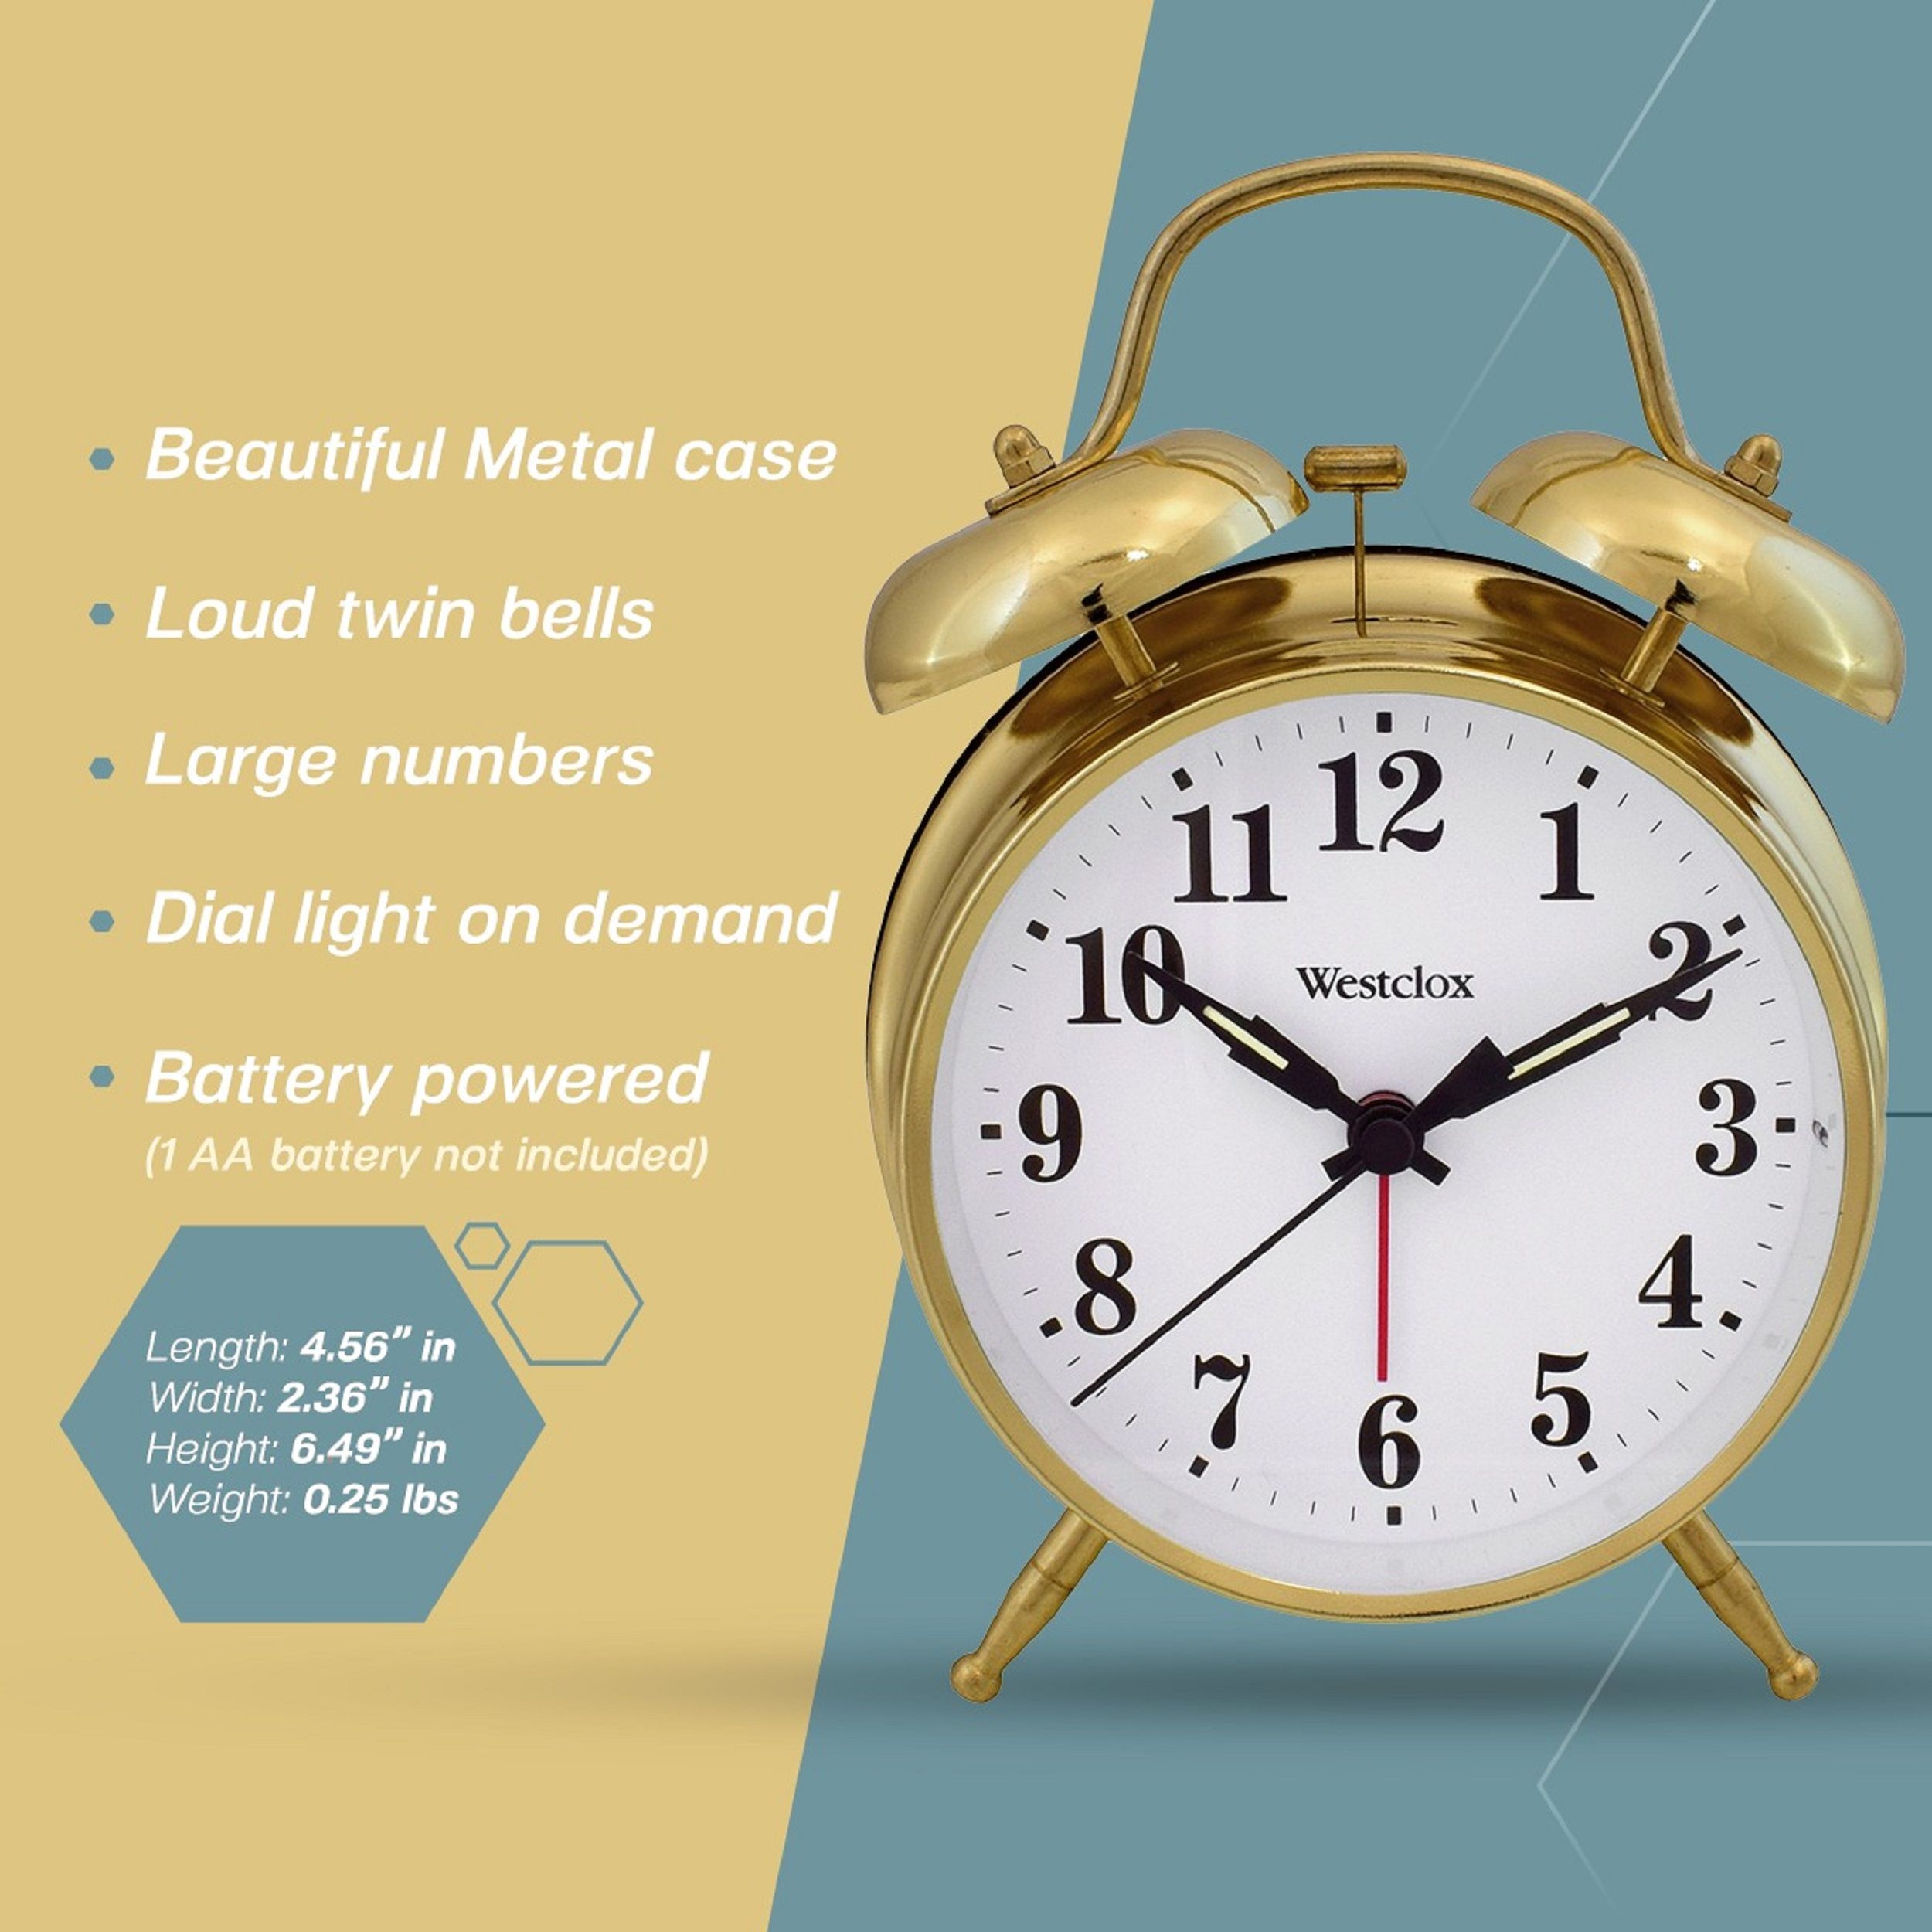 Westclox Vintage Style Analog QA Twin Bell Alarm Clock Gold Finish – Model 70010G | Walmart (US)